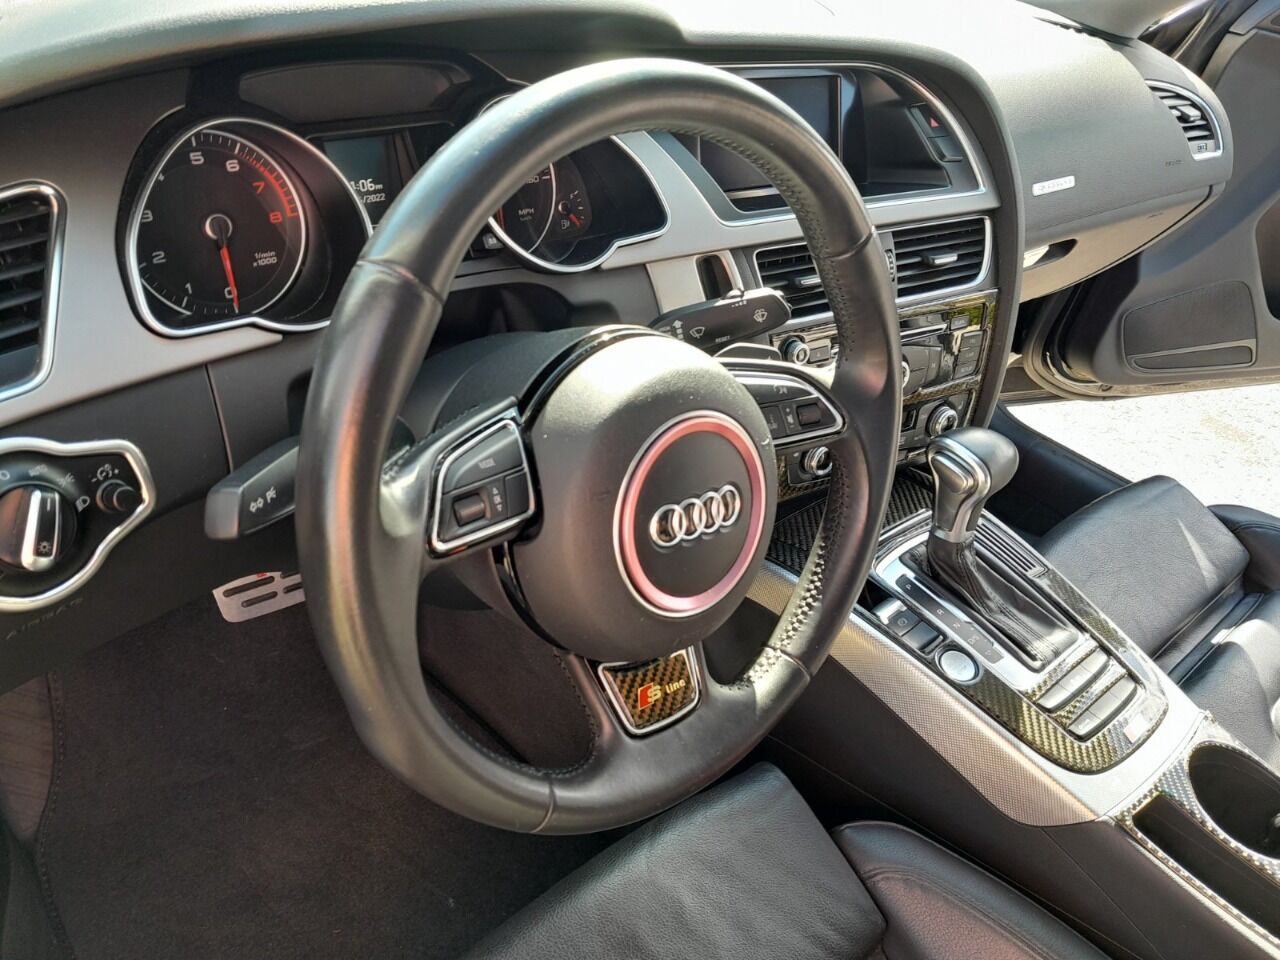 2015 Audi A5 Coupe - $12,950